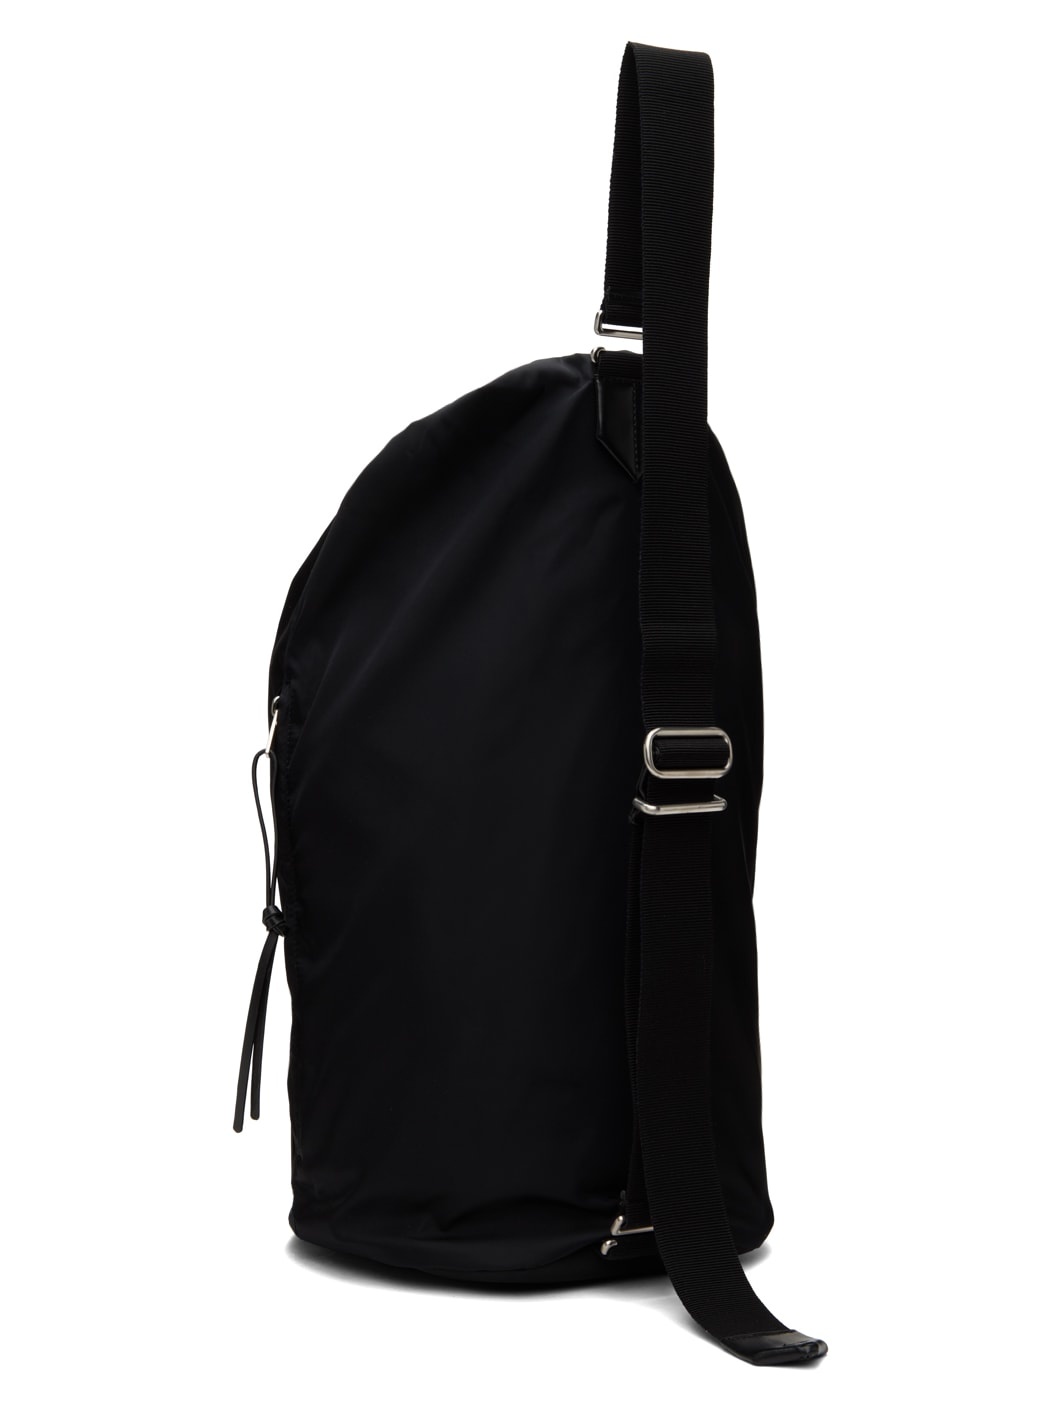 Black Drawstring Bag - 3